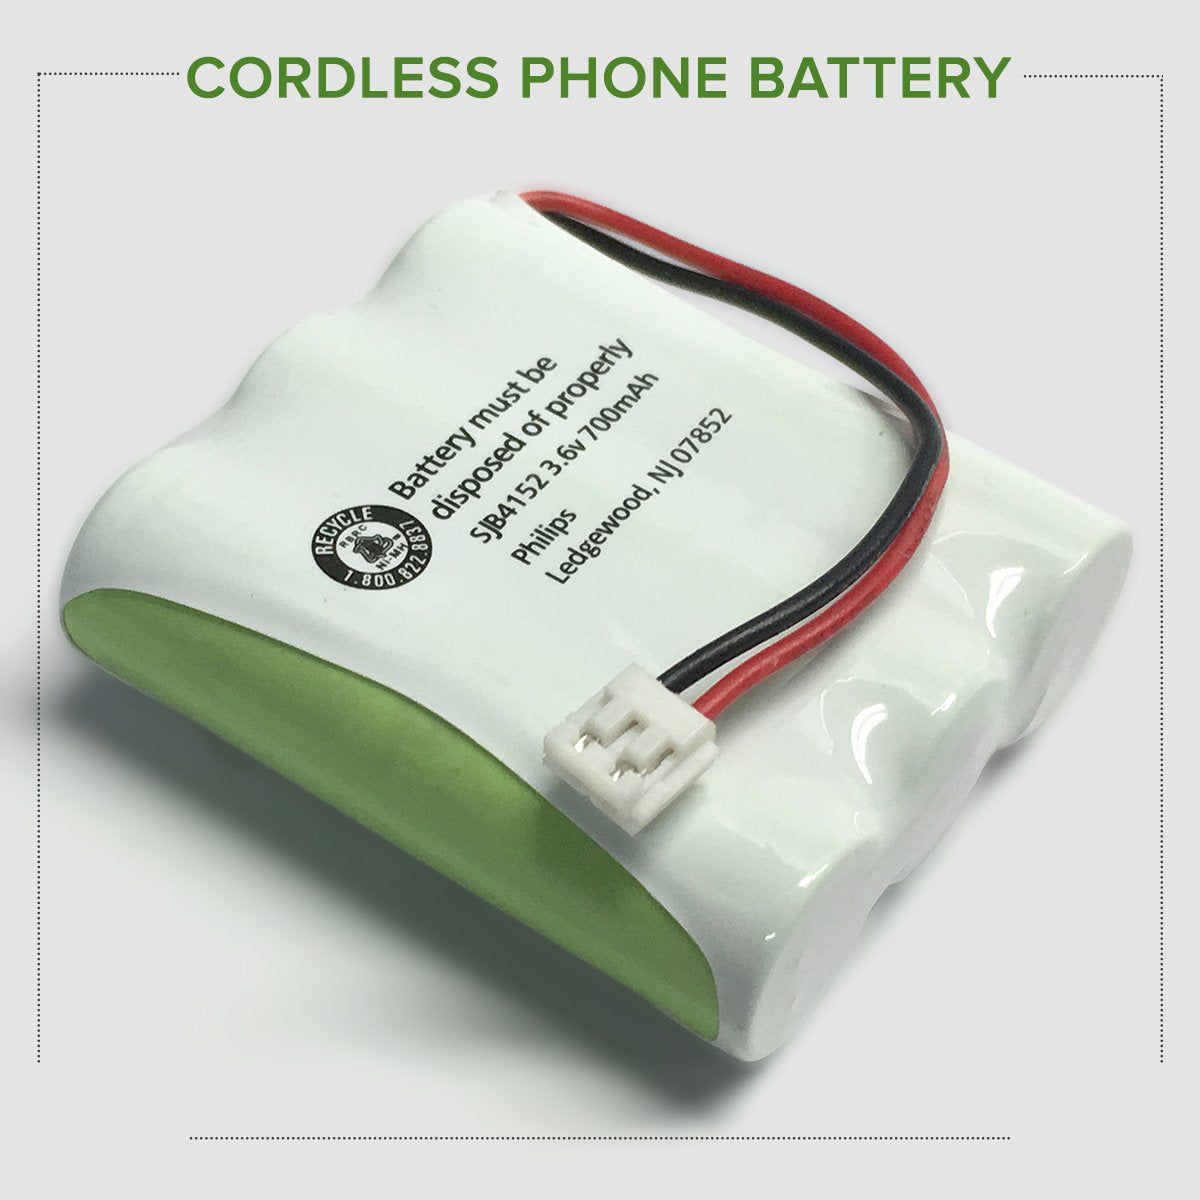 AT&T  9301 Cordless Phone Battery